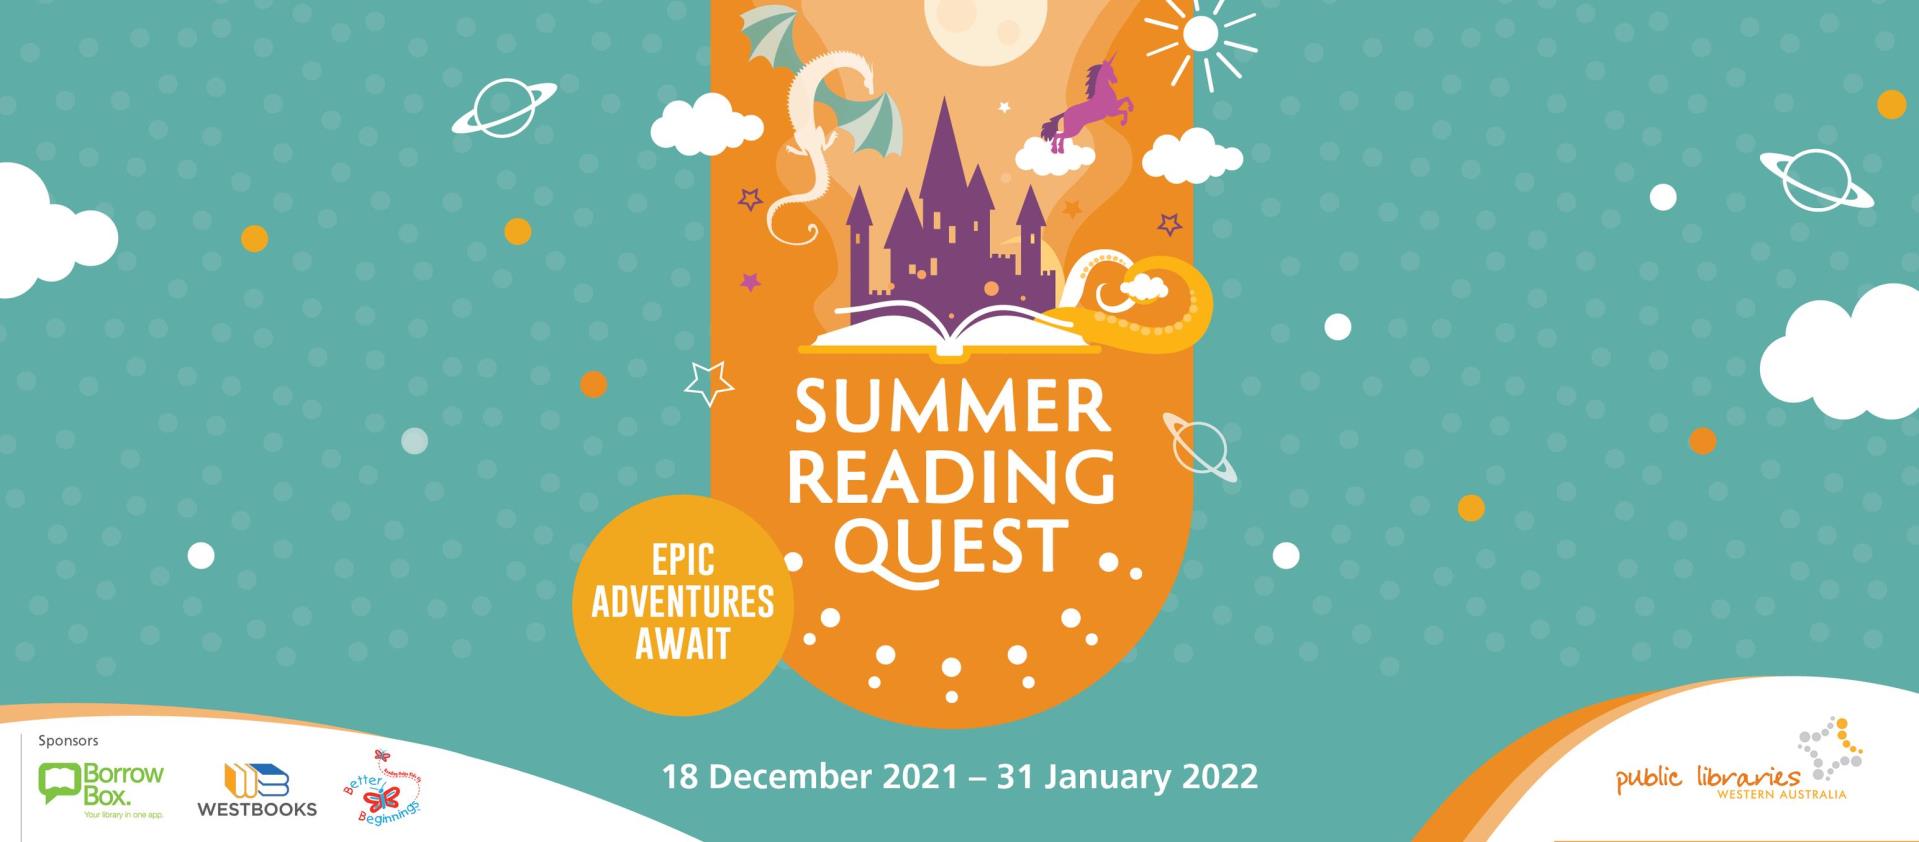 Summer Reading Quest – EPIC ADVENTURES AWAIT